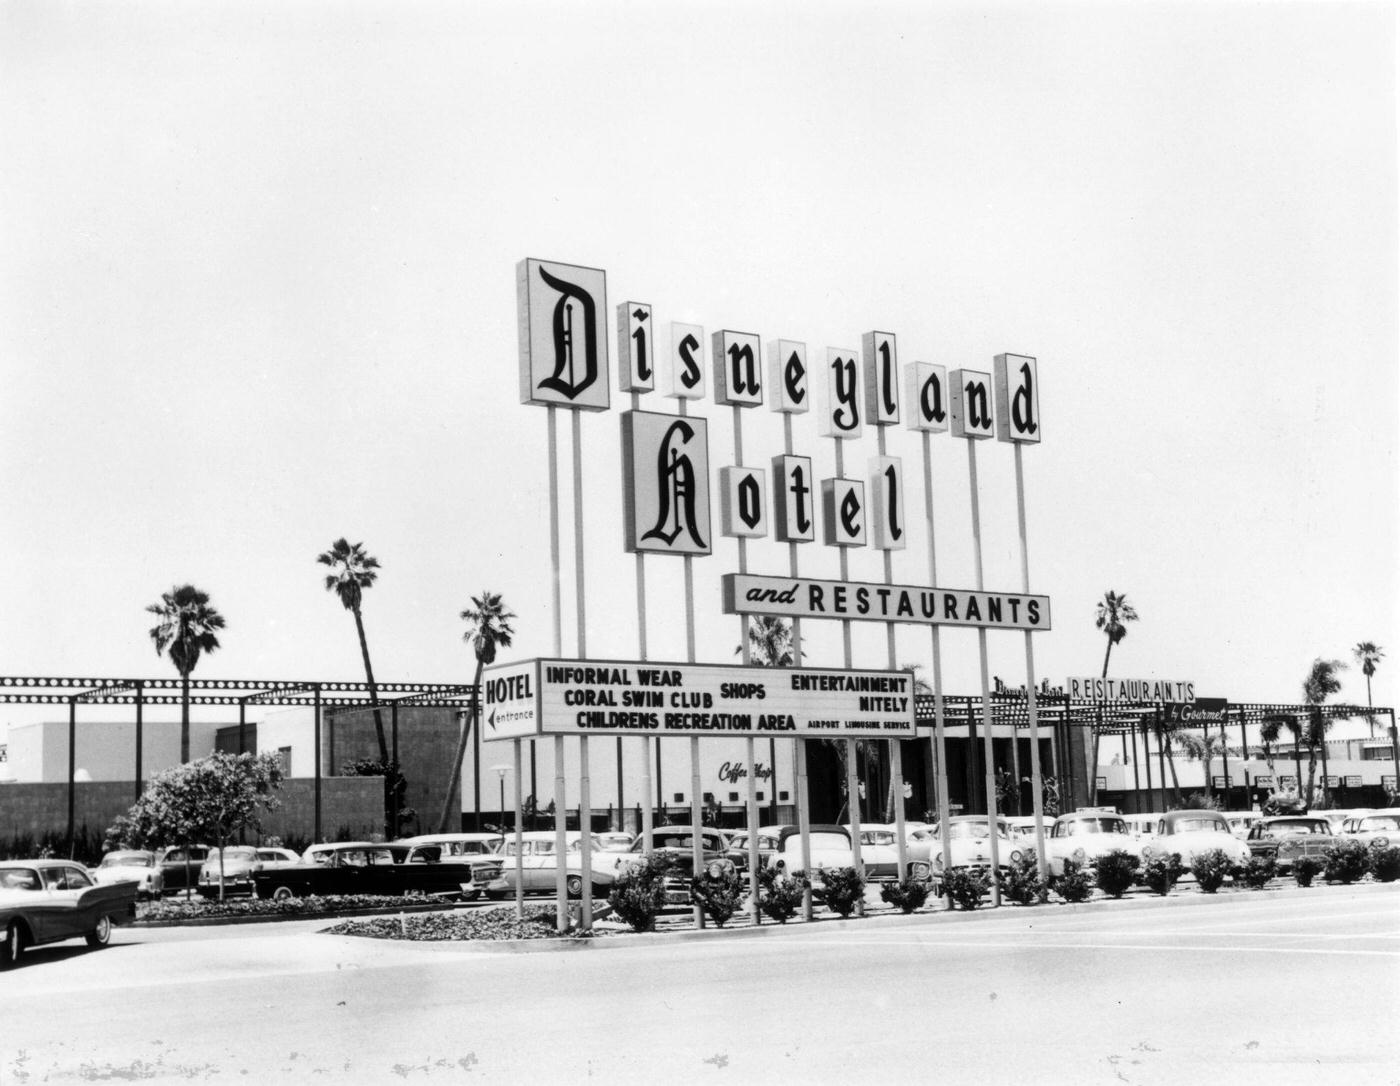 The Disneyland Hotel at Disneyland amusement park in Anaheim, California, 1960